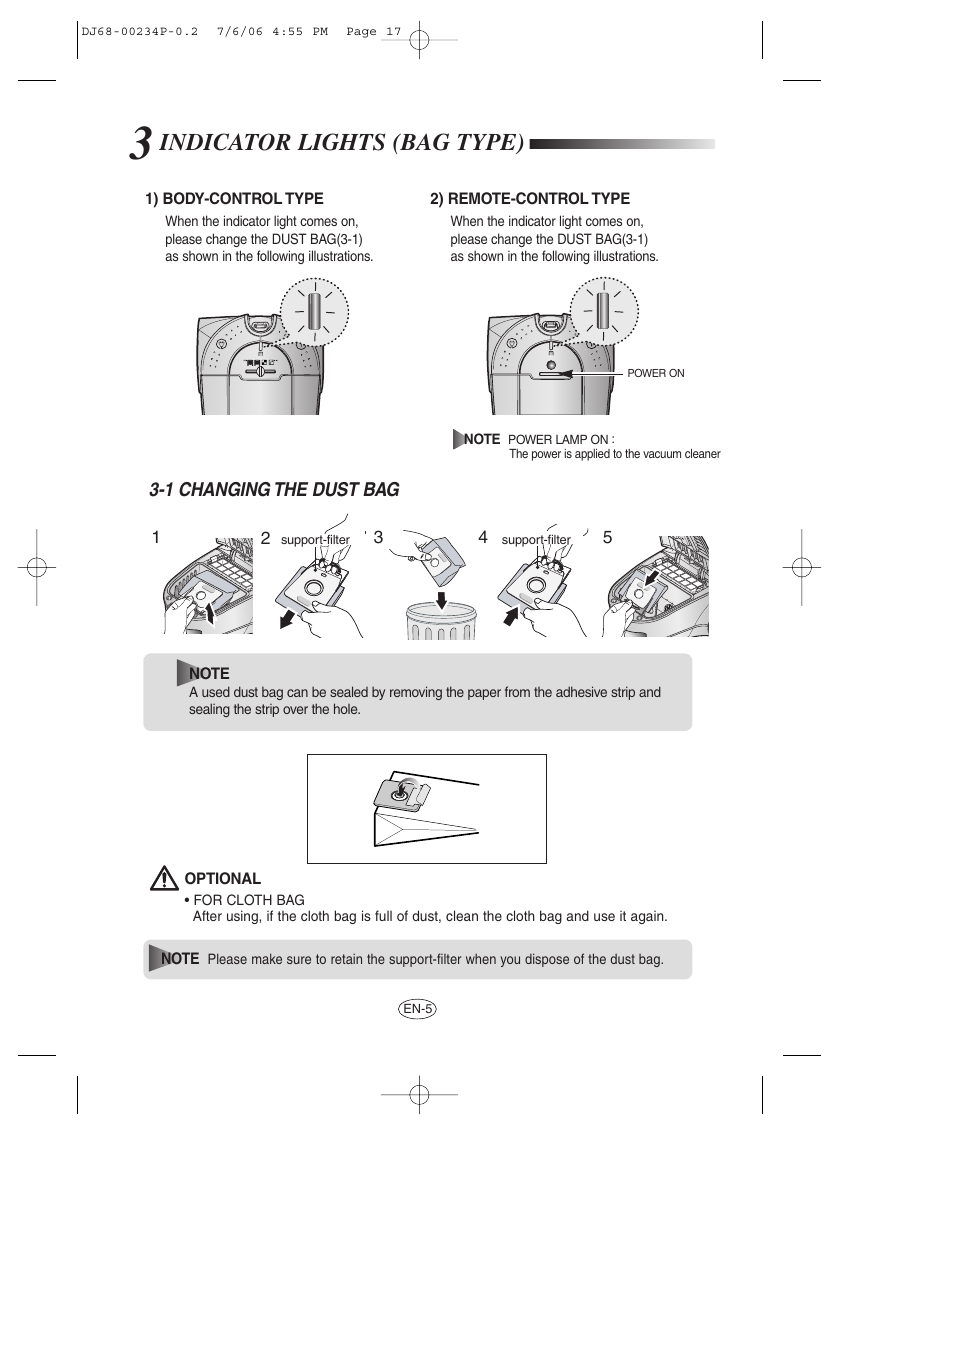 Indicator lights (bag type) | Samsung SC7840 User Manual | Page 17 / 56